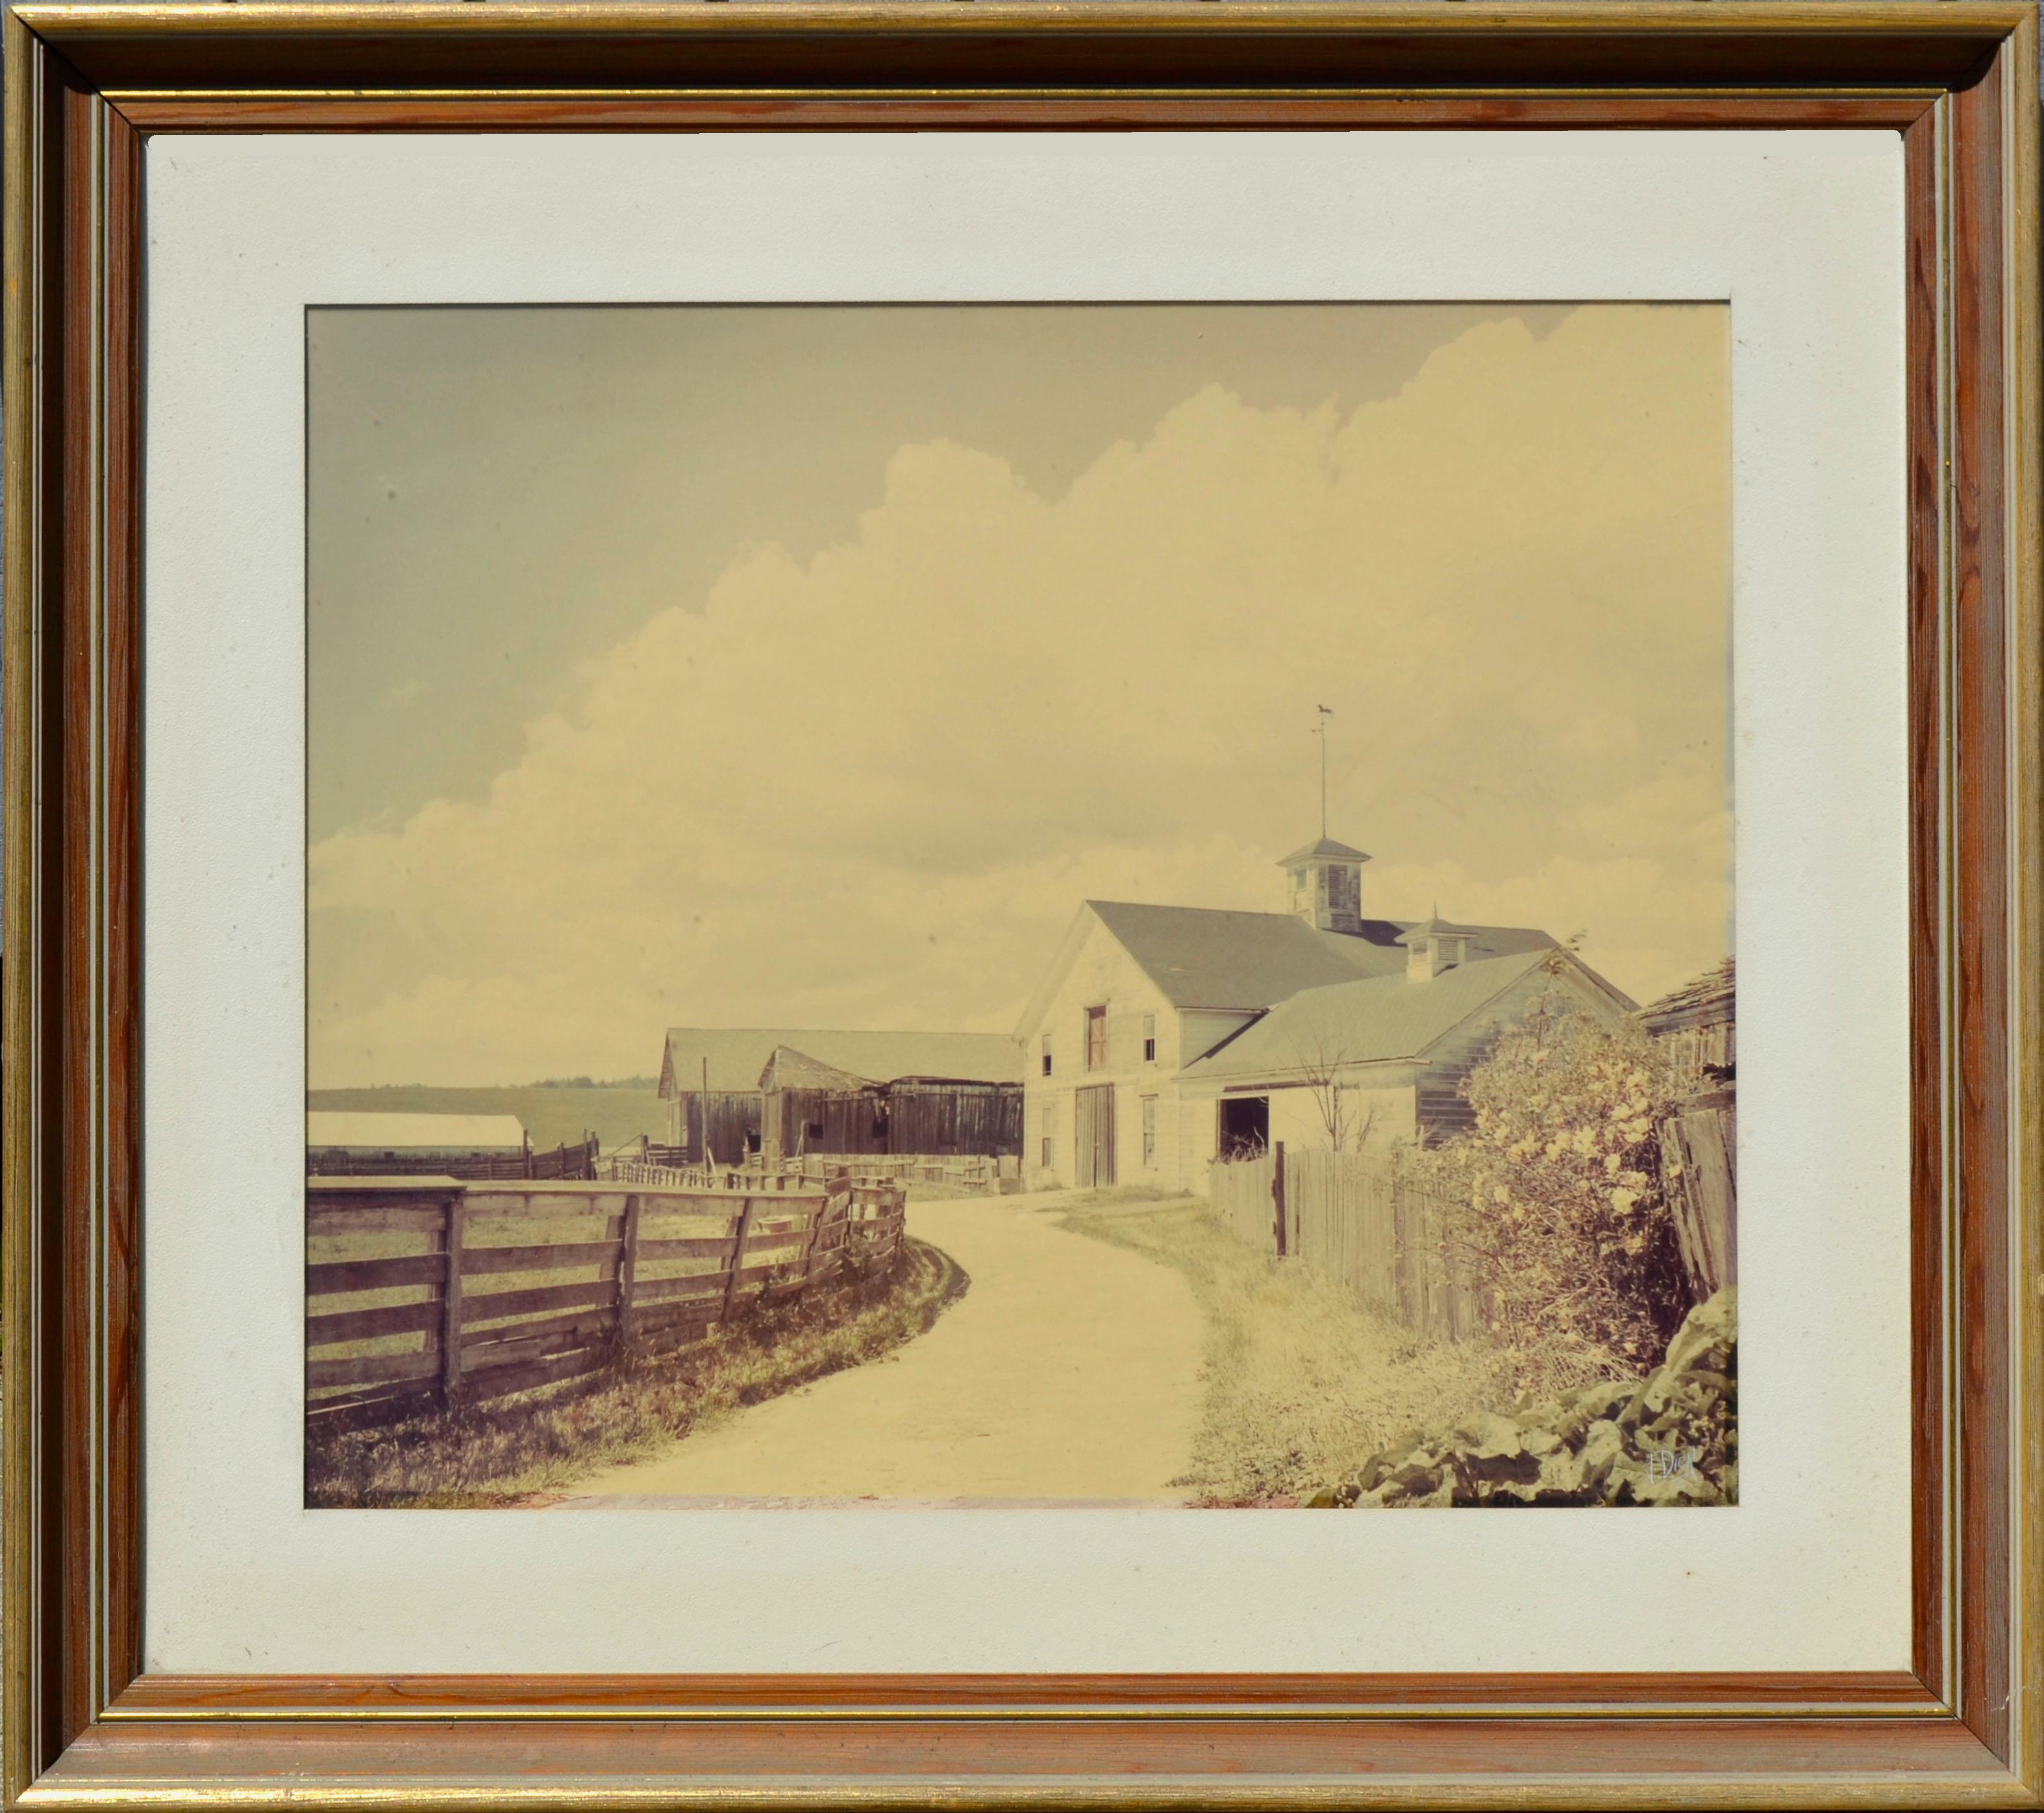 Vester Dick Color Photograph – Wilder Ranch Landschaft Fotografie aus der Mitte des Jahrhunderts